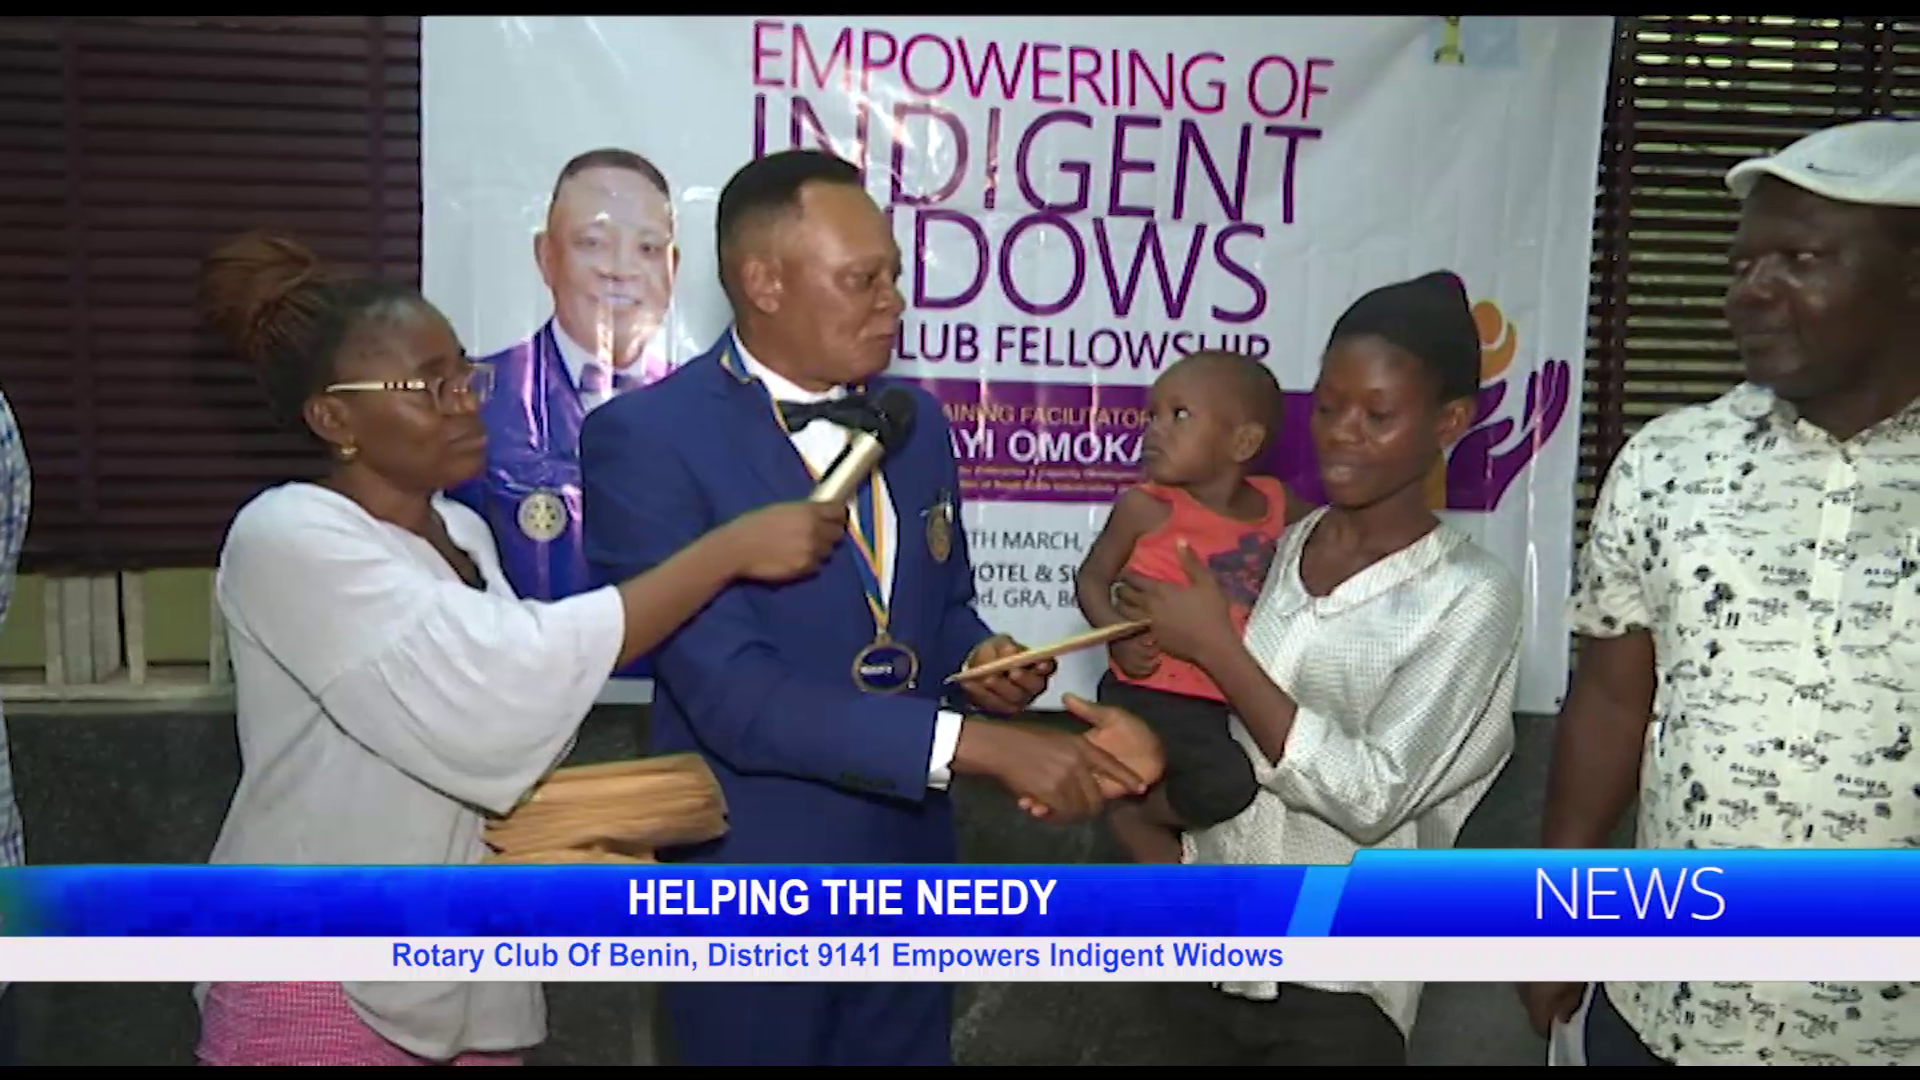 Rotary Club Of Benin, District 9141 Empowers Indigent Widows